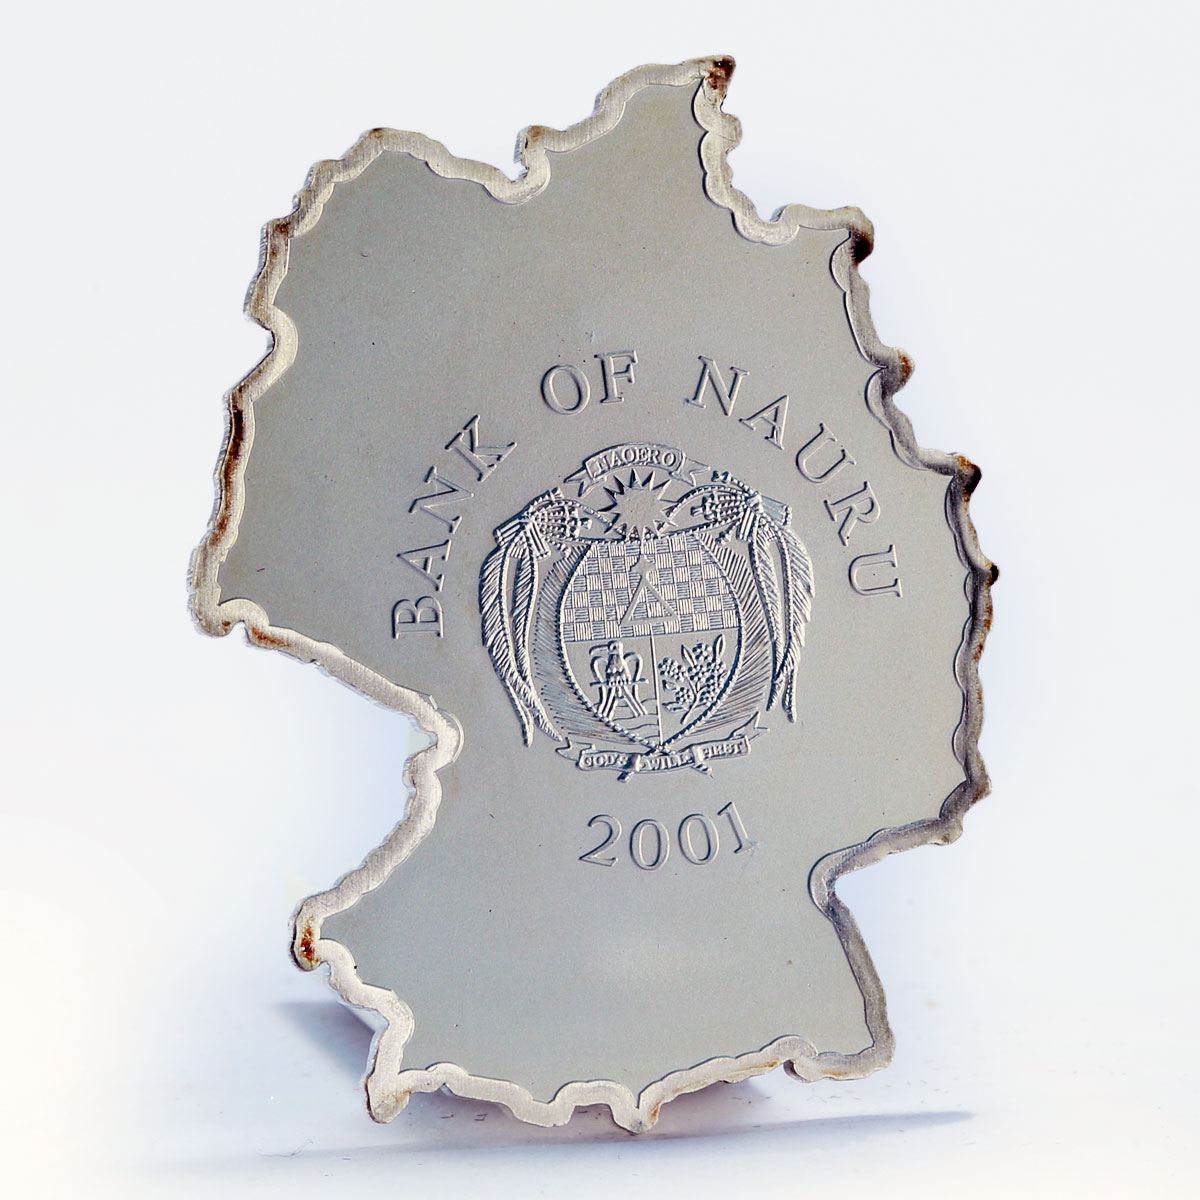 Nauru 10 dollars Discontinuation of the German Mark proof silver coin 2001